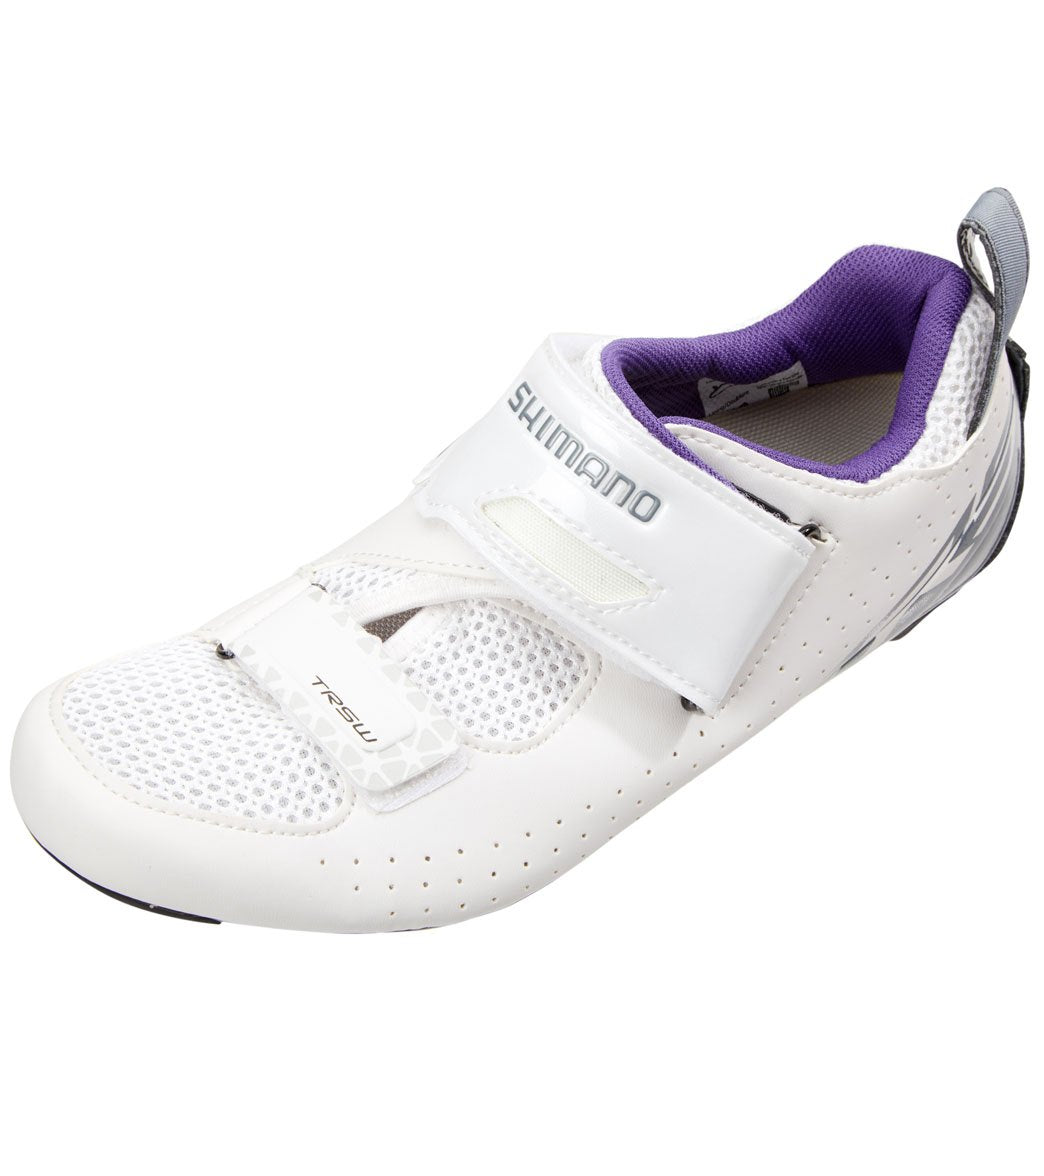 Shimano Women's SH-TR5 Triathlon Cycling Shoes at 